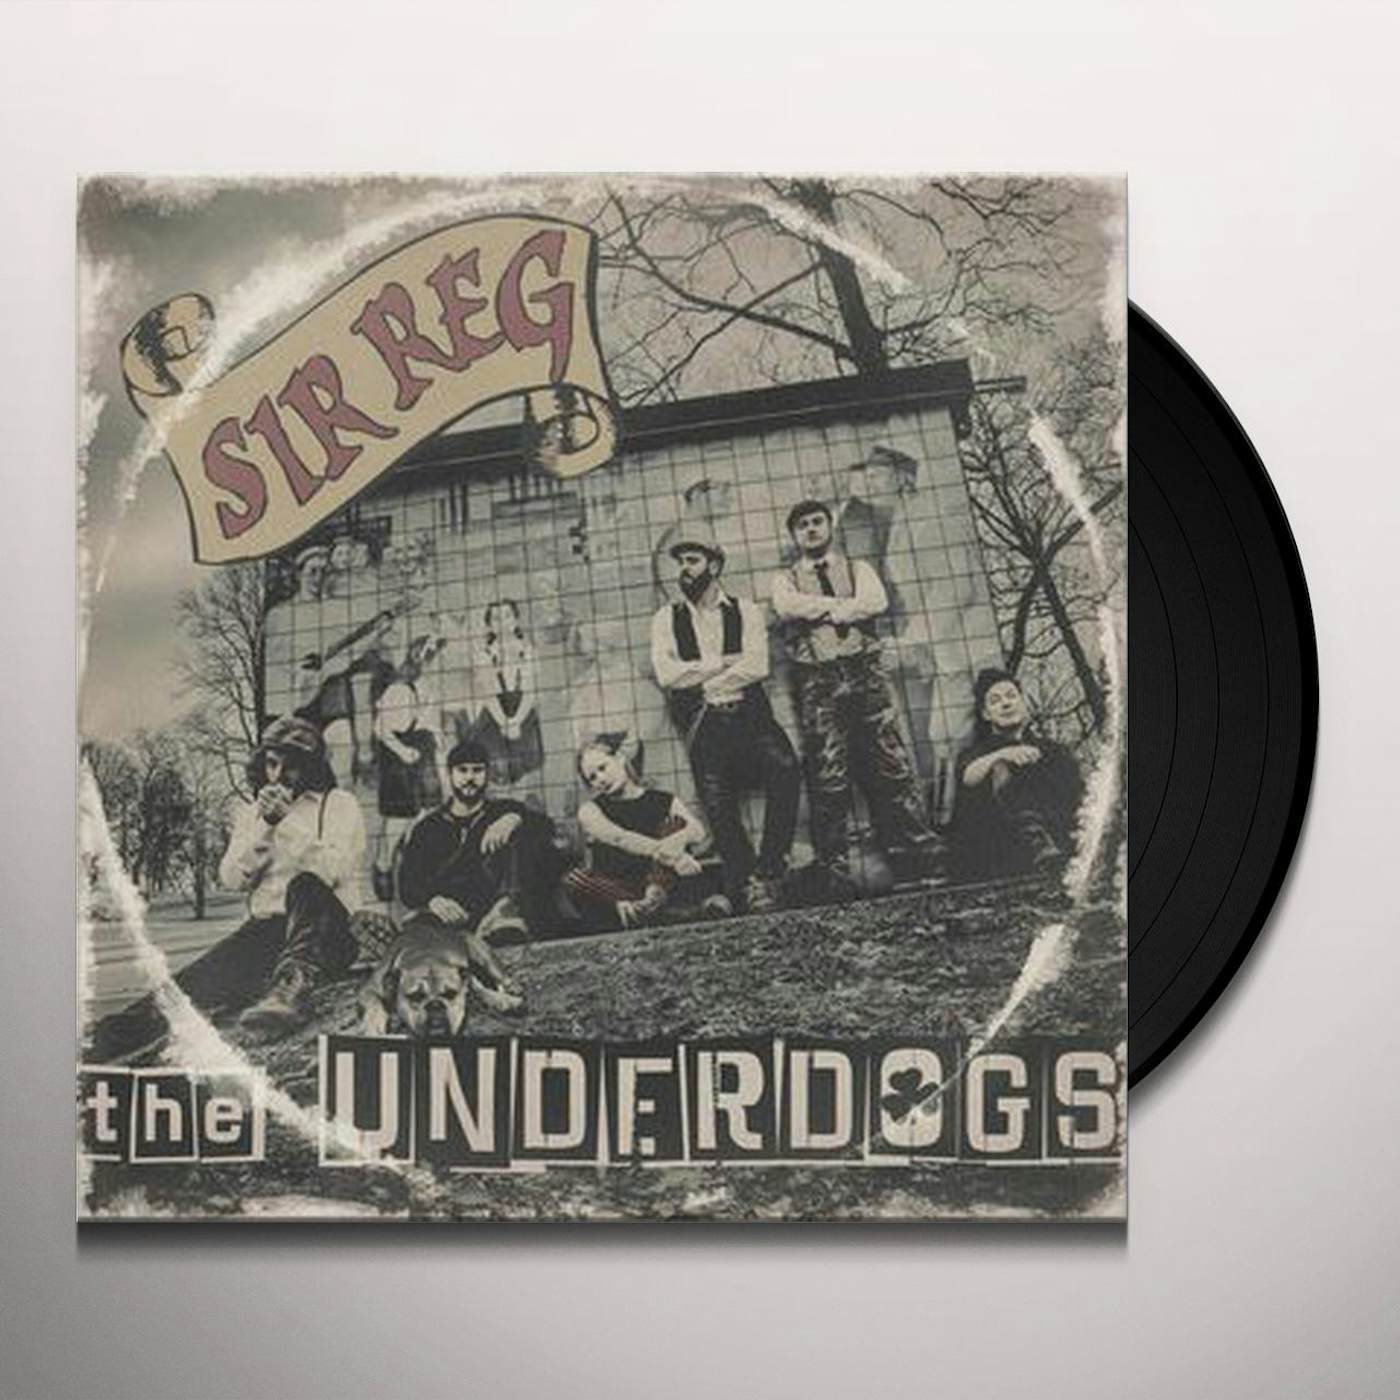 Sir Reg The underdogs Vinyl Record